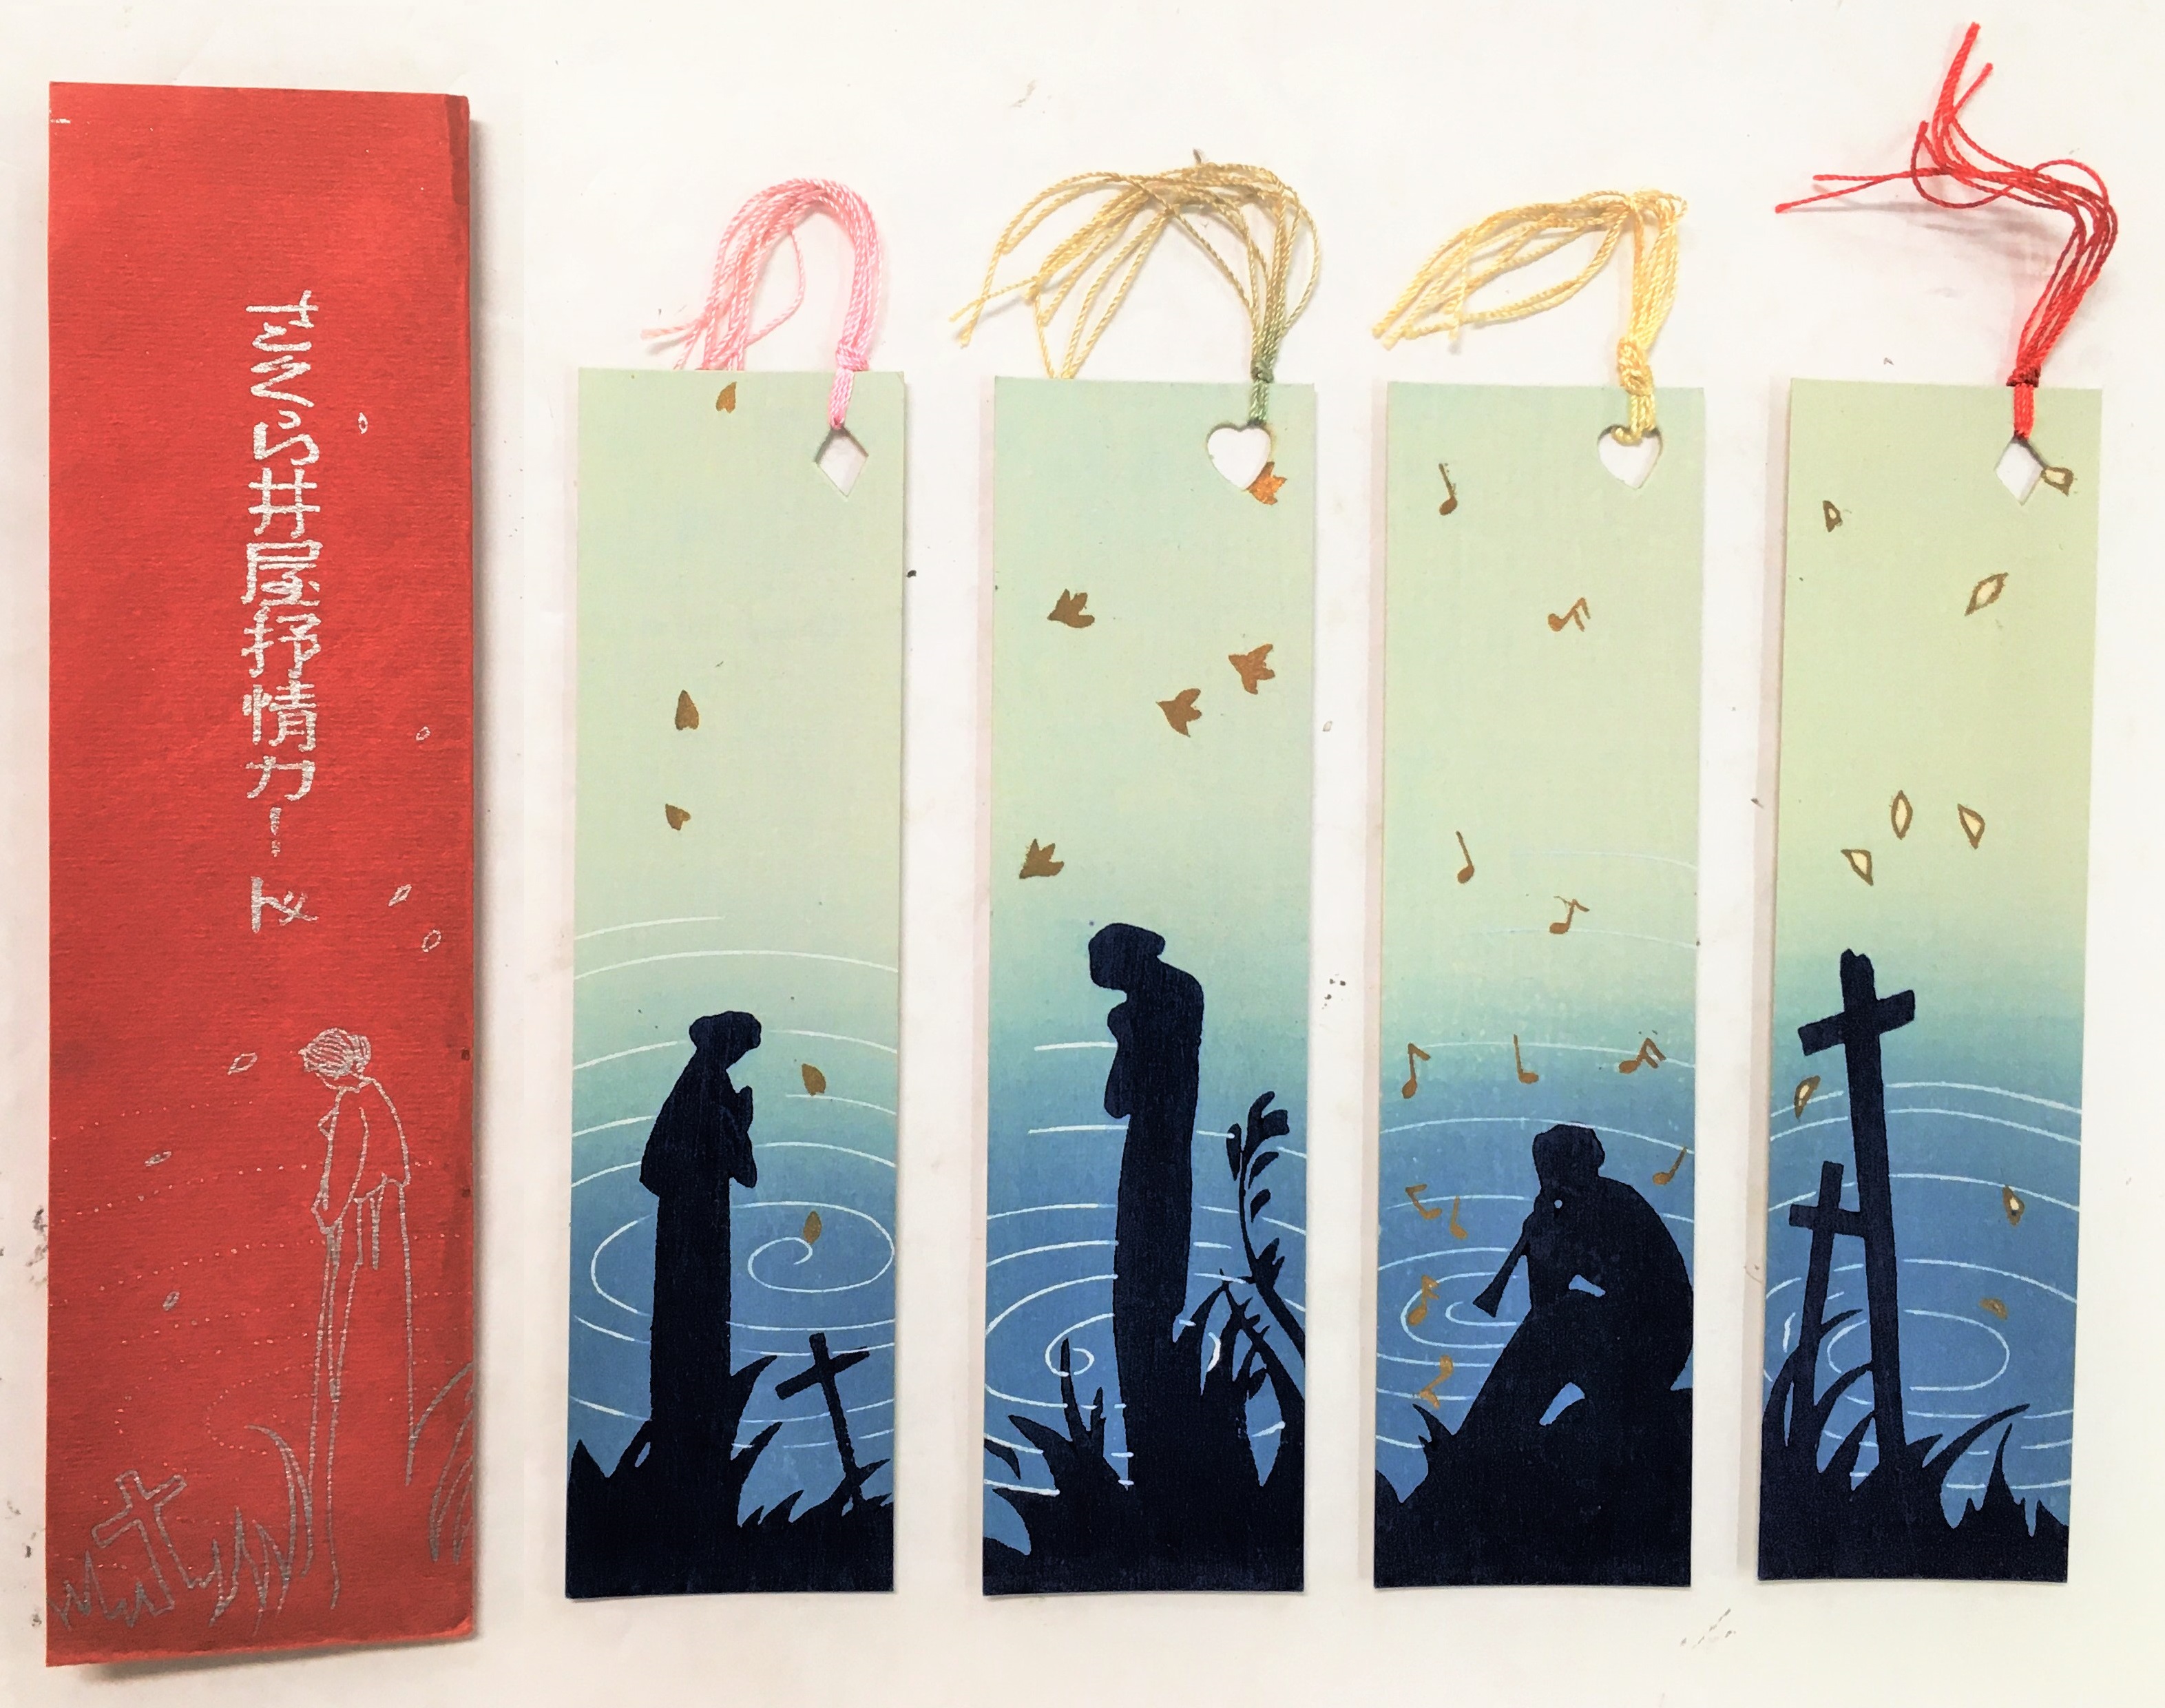 Woodblock print bookmarks made by Sakurai-ya. [Sakurai-ya Jojoh